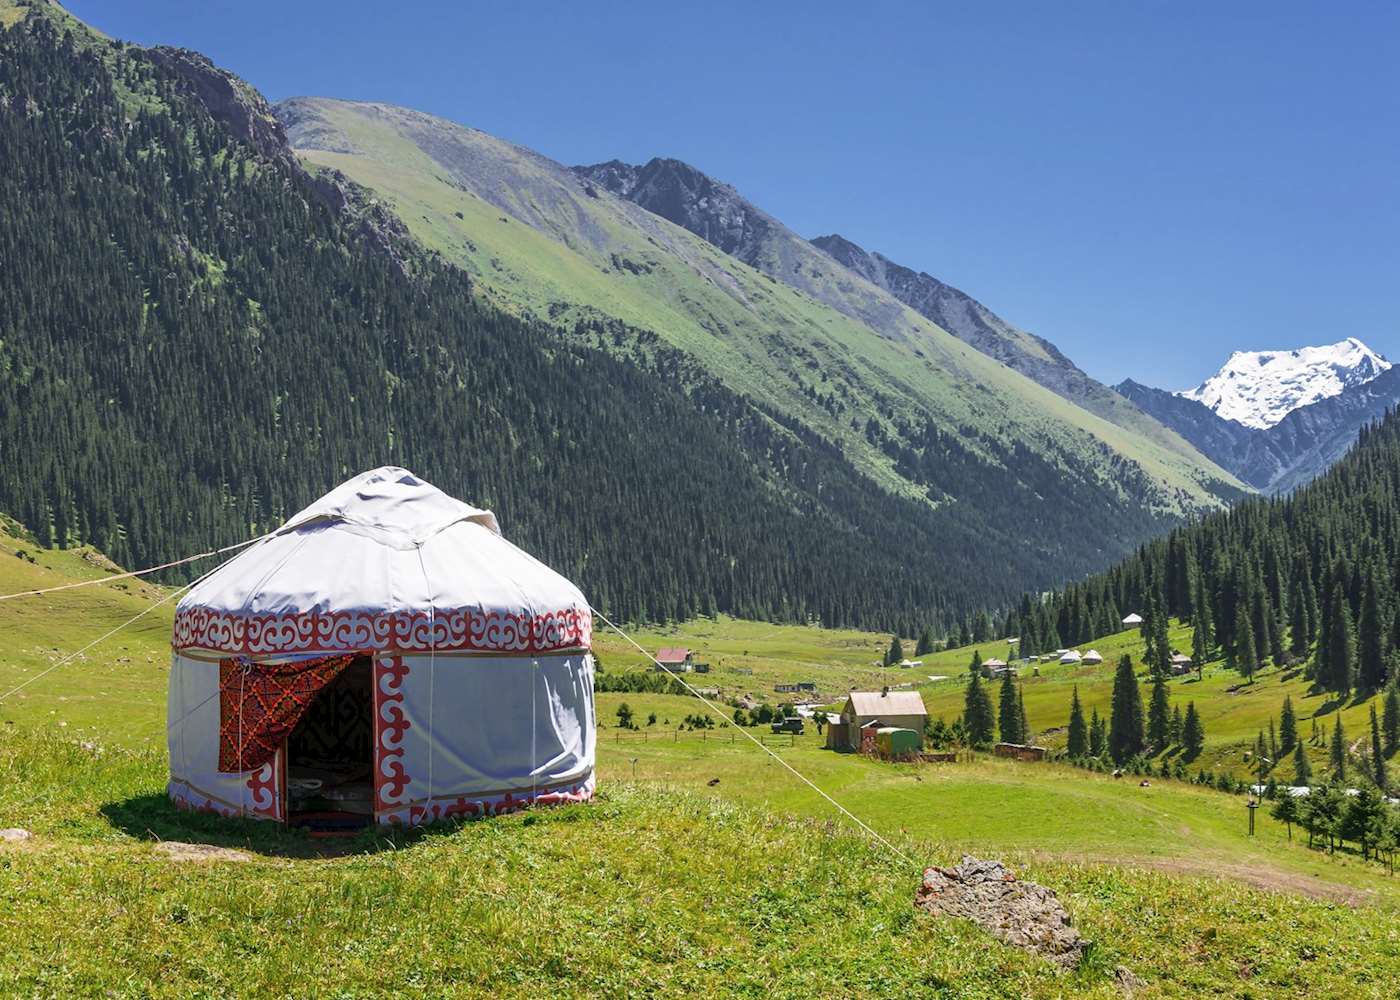 kyrgyzstan travel advice uk